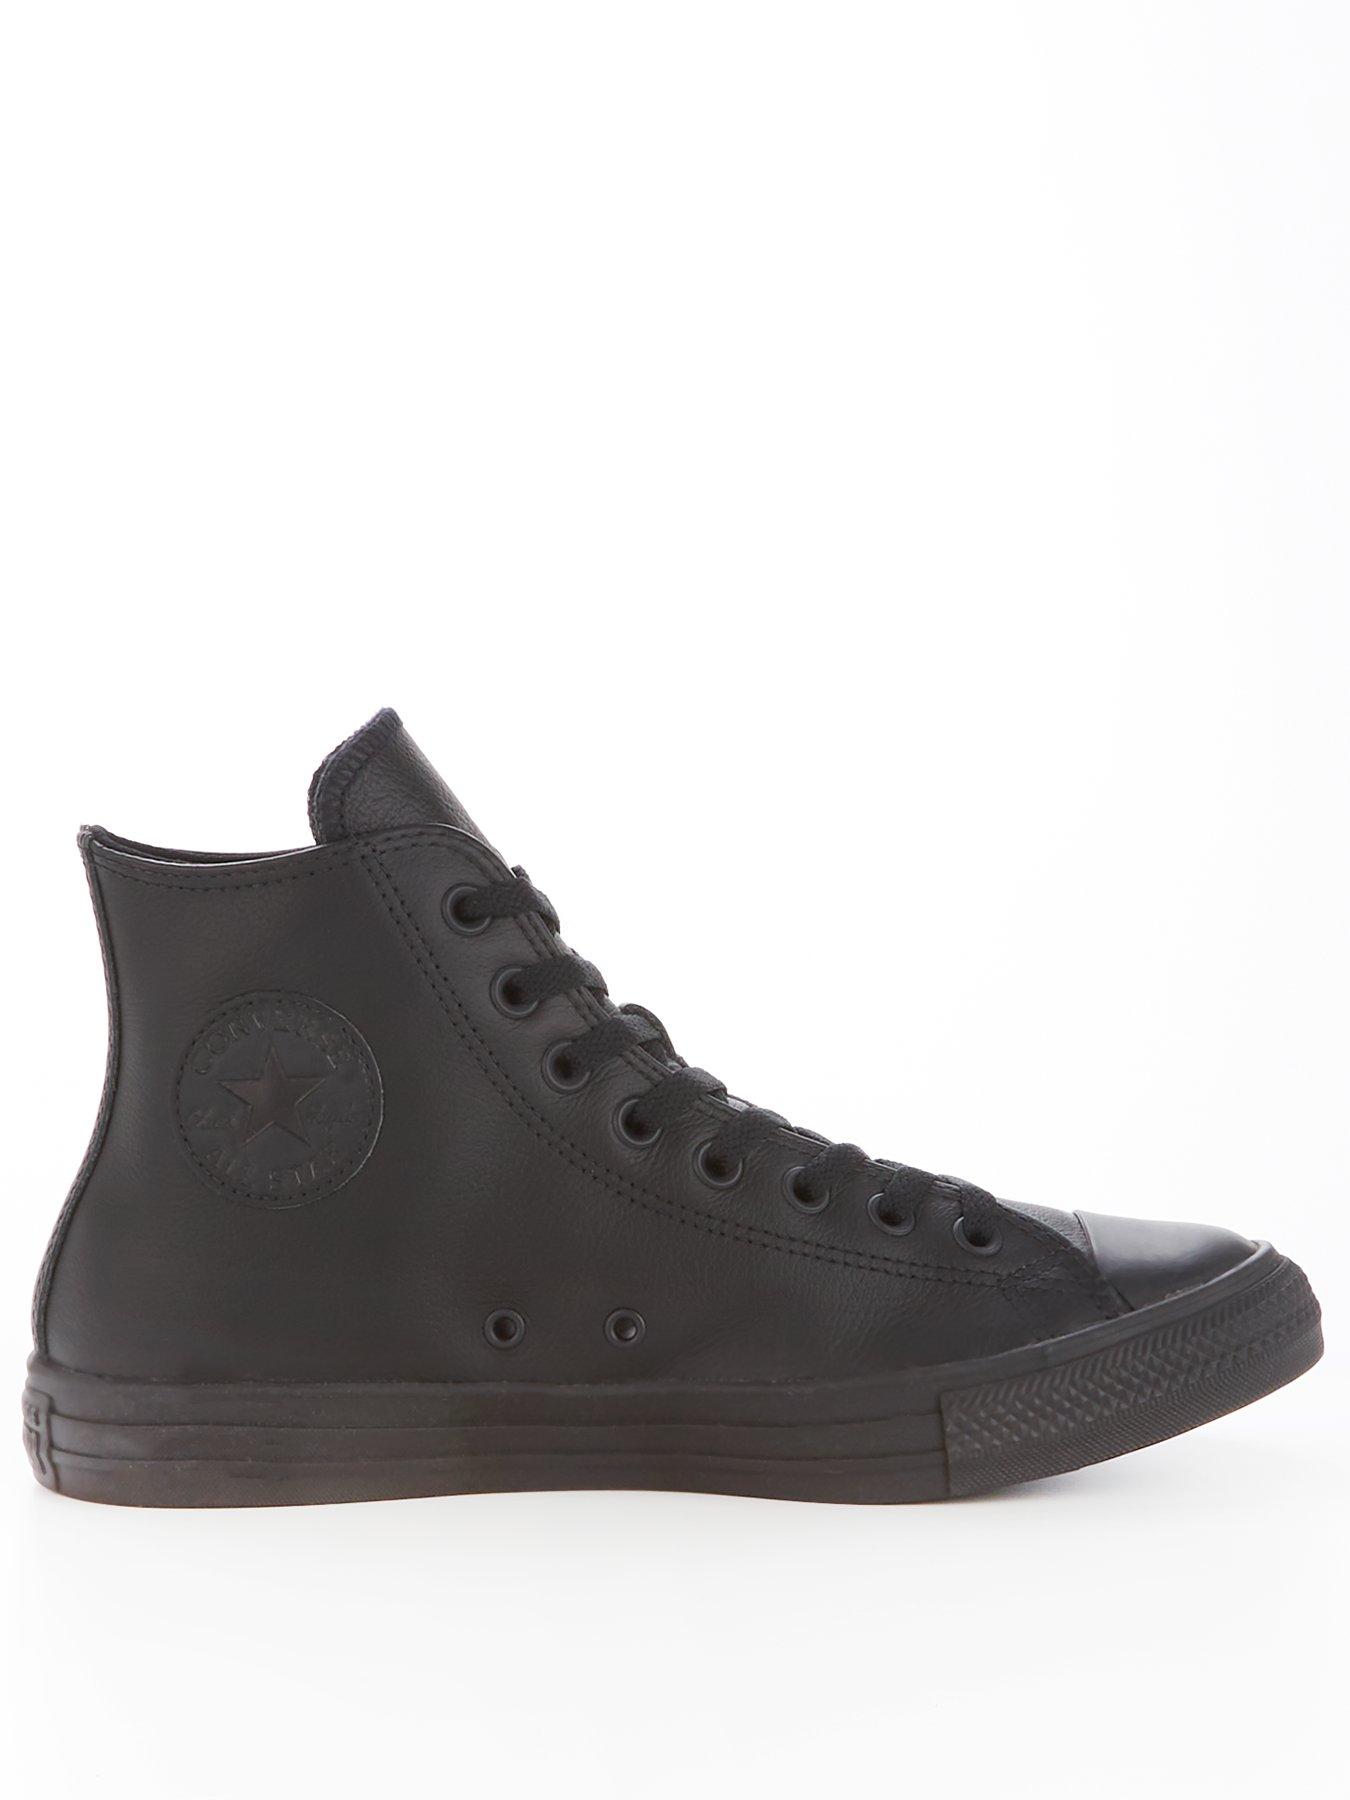 black leather converse size 6 uk